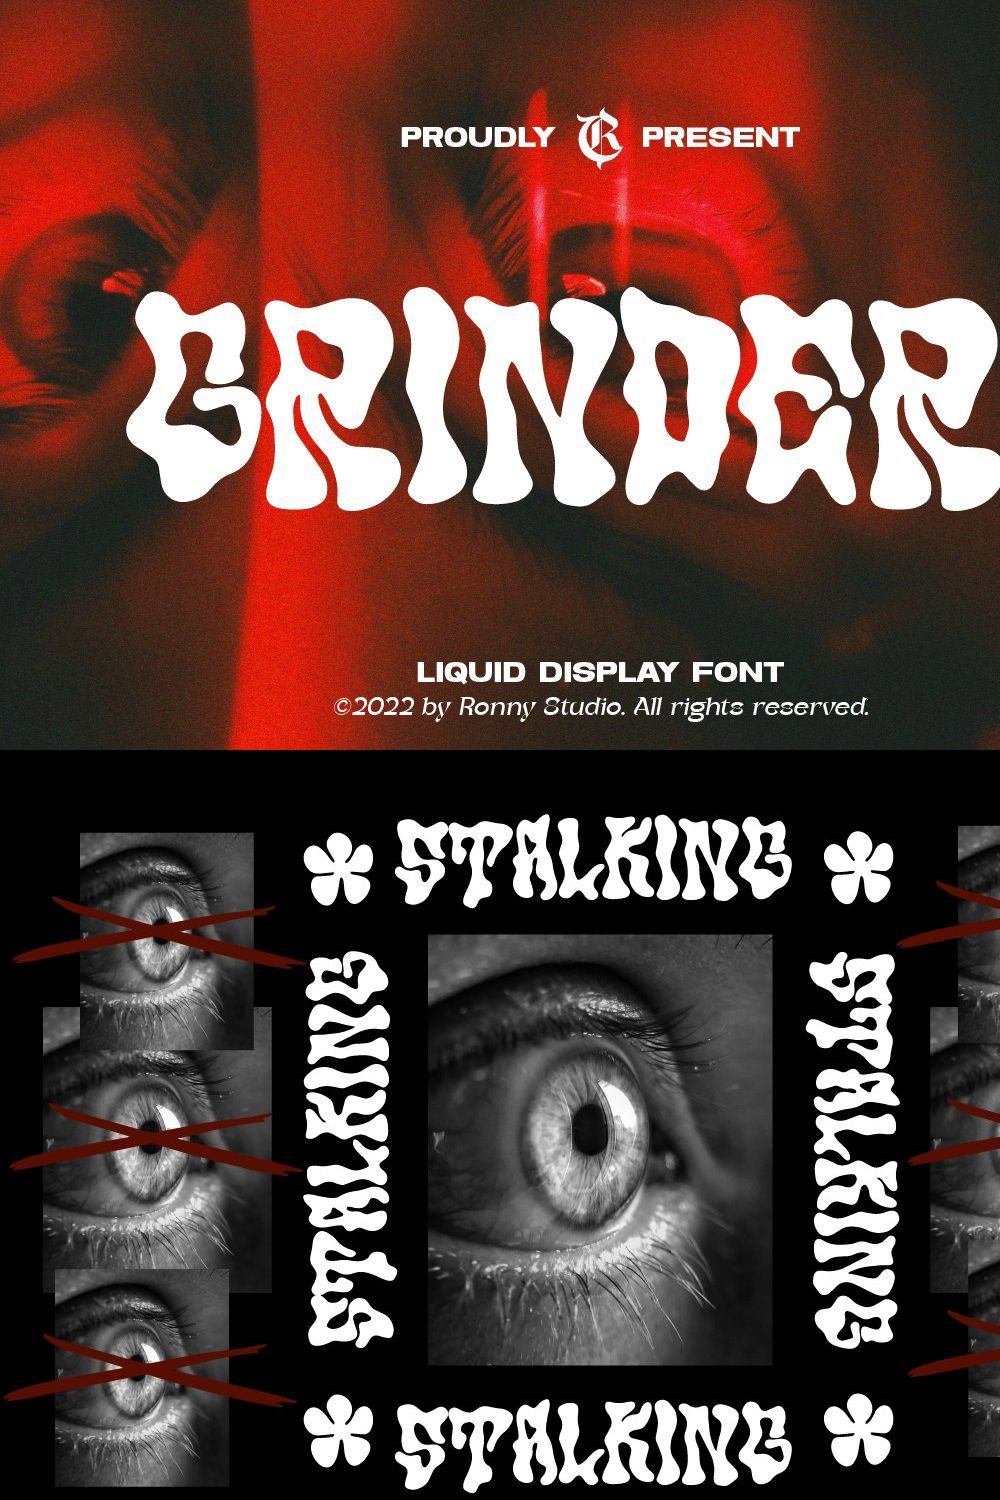 Grinder - Liquid Display Font pinterest preview image.